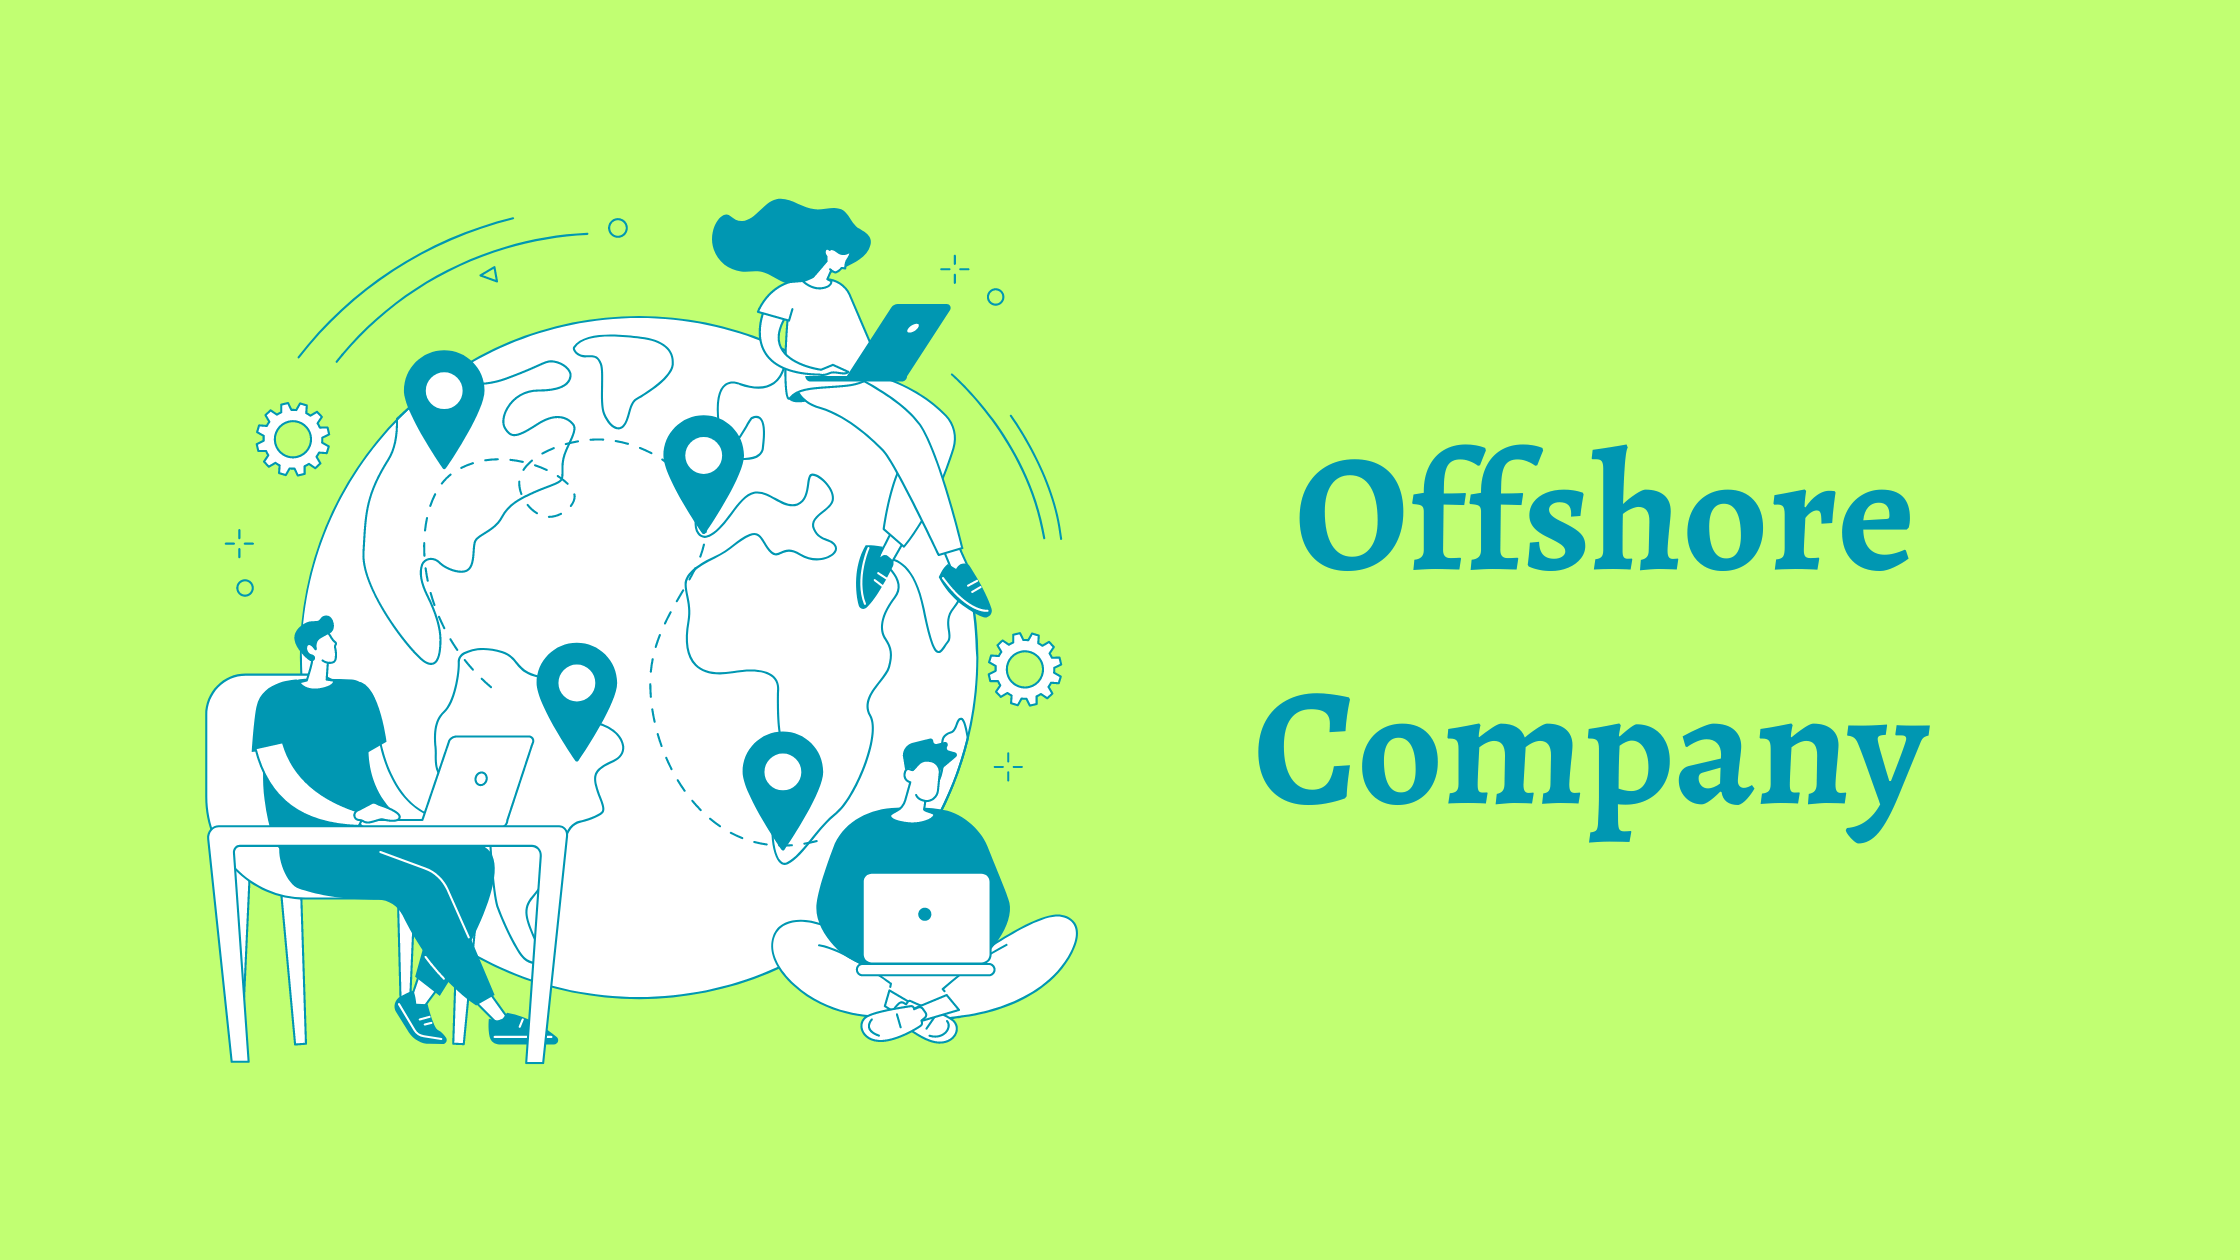 Offshore Company 